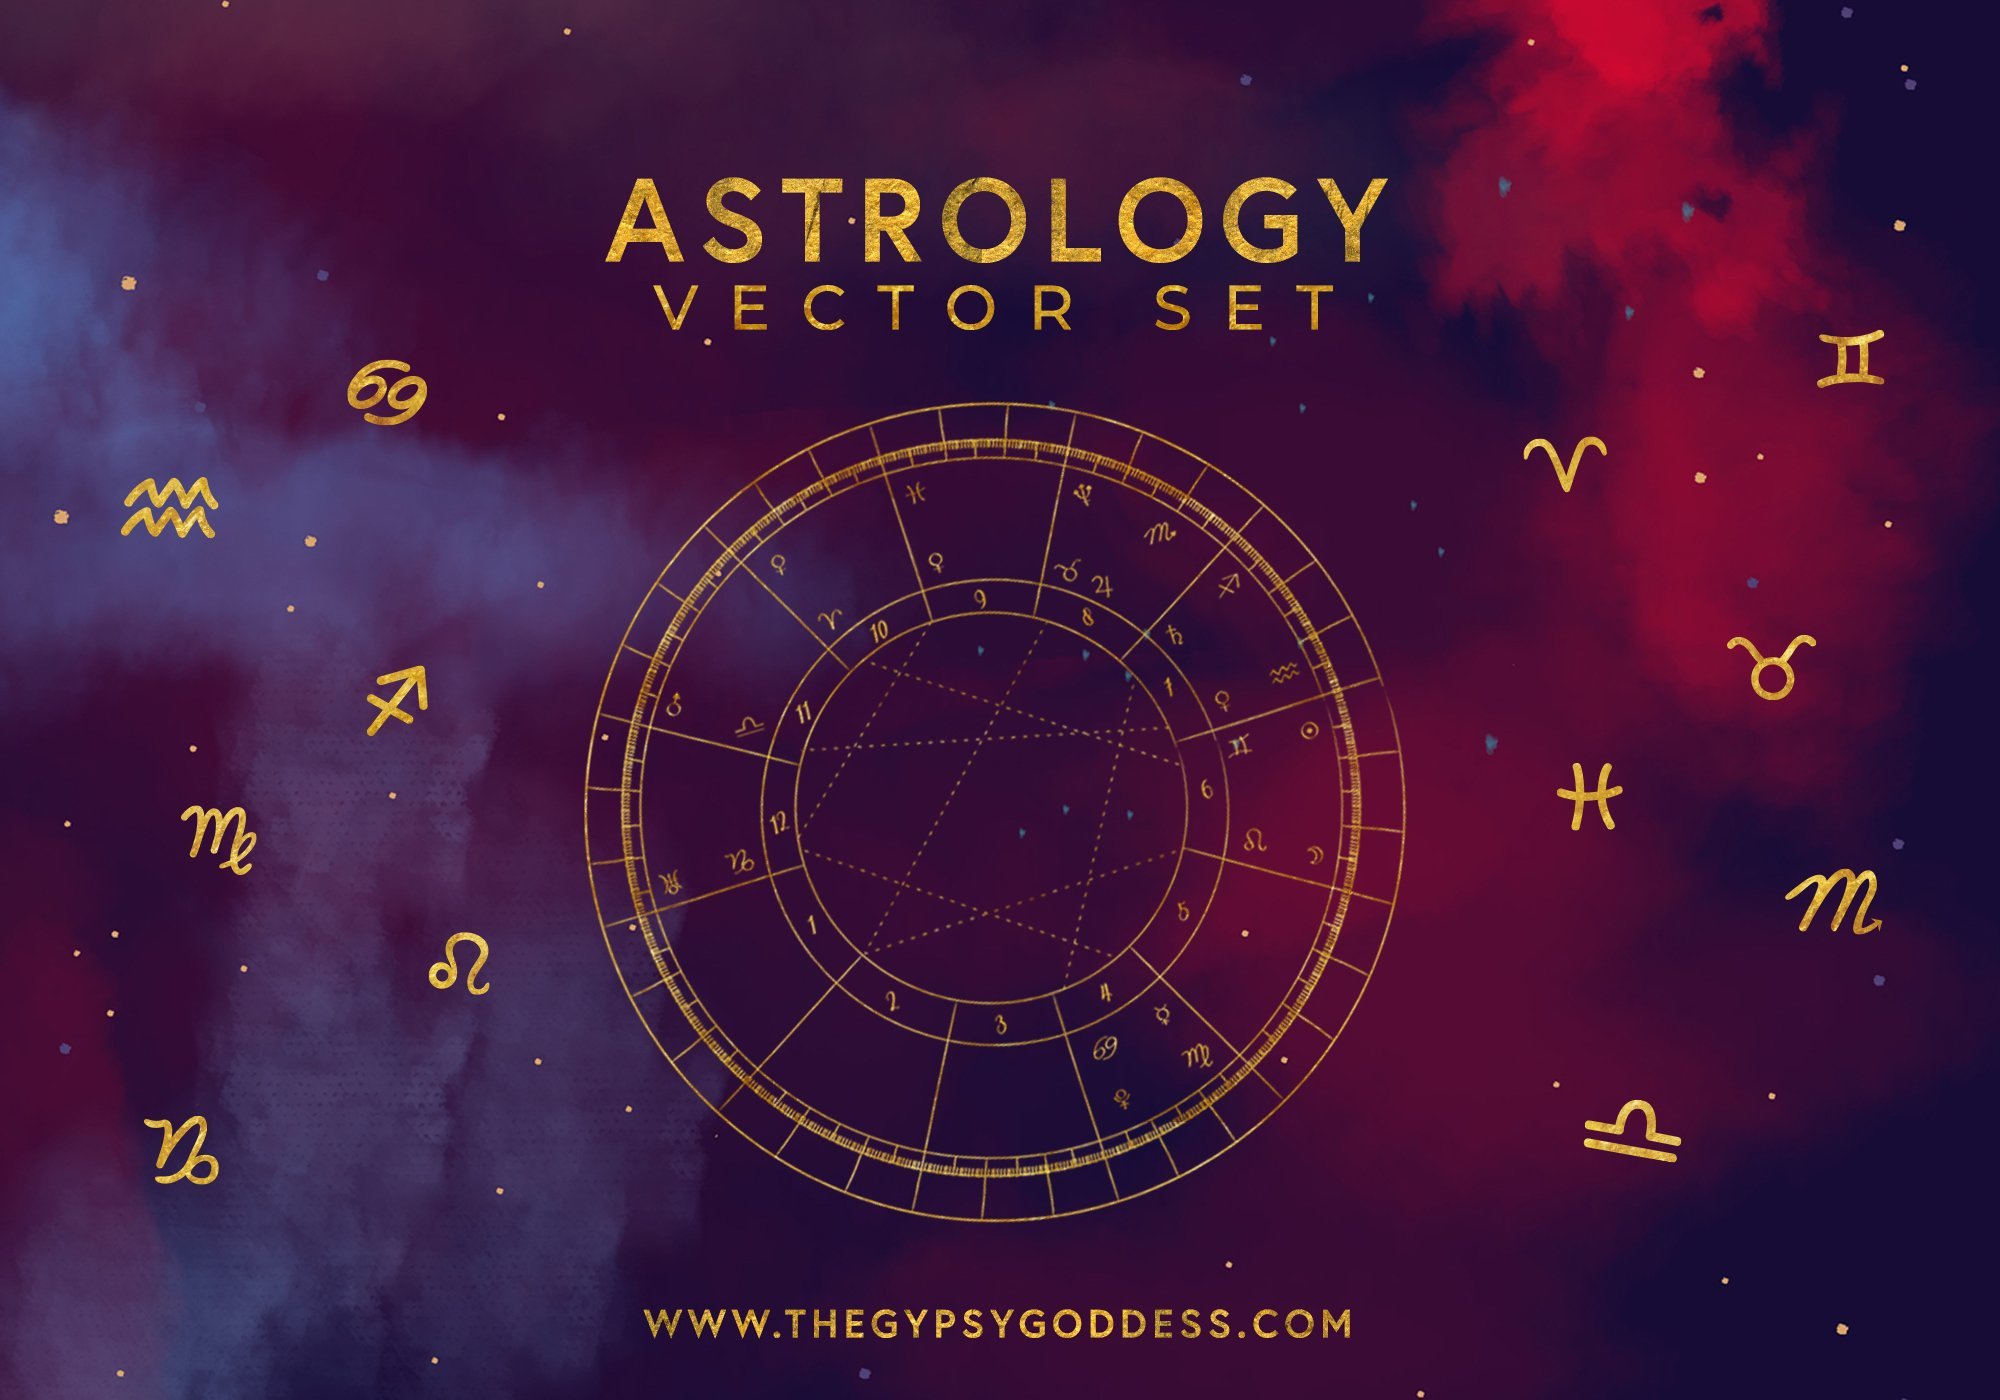 zodiac sign chart printable